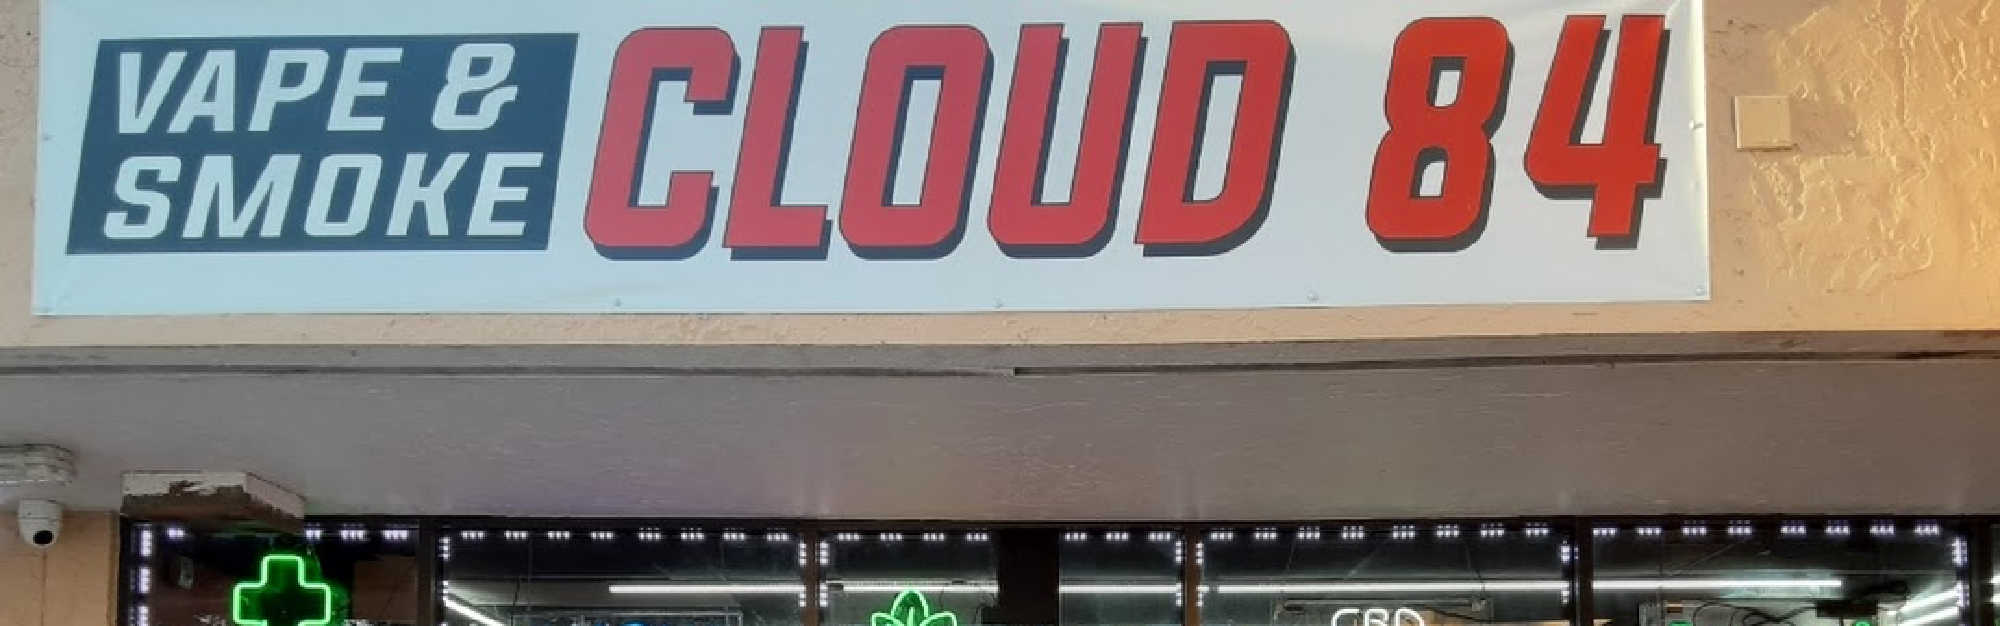 image of cloud 84 smoke shop